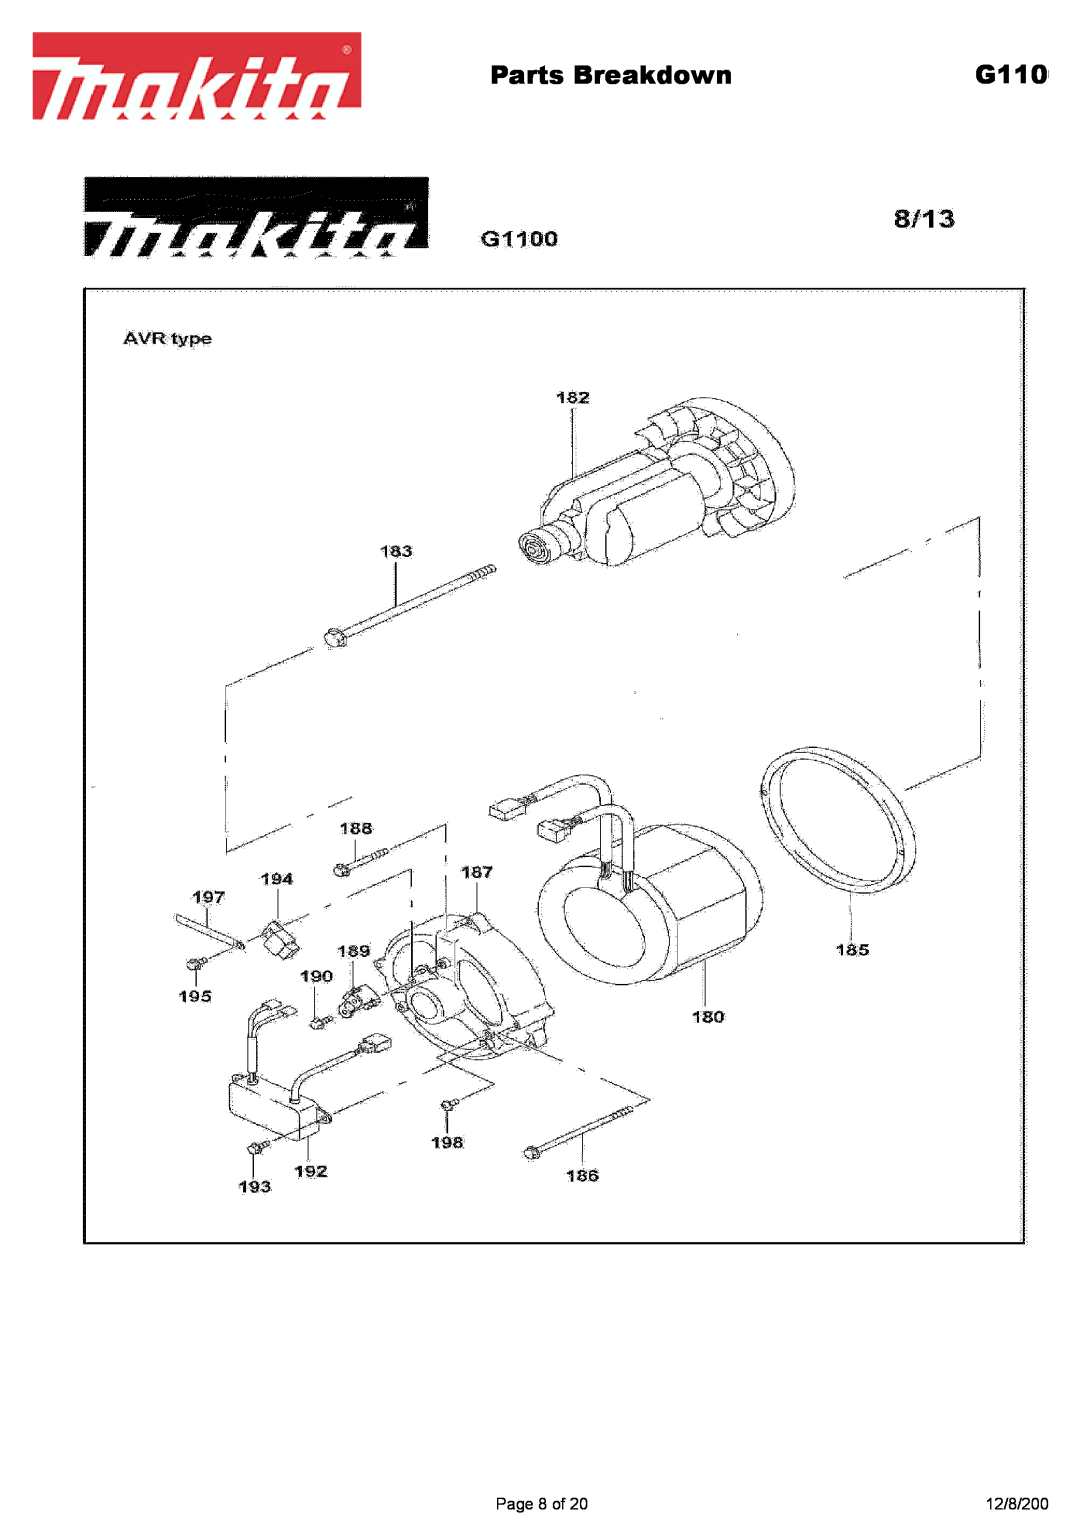 Makita G1700i manual Parts Breakdown, G110, Page 8 of, 12/8/200 